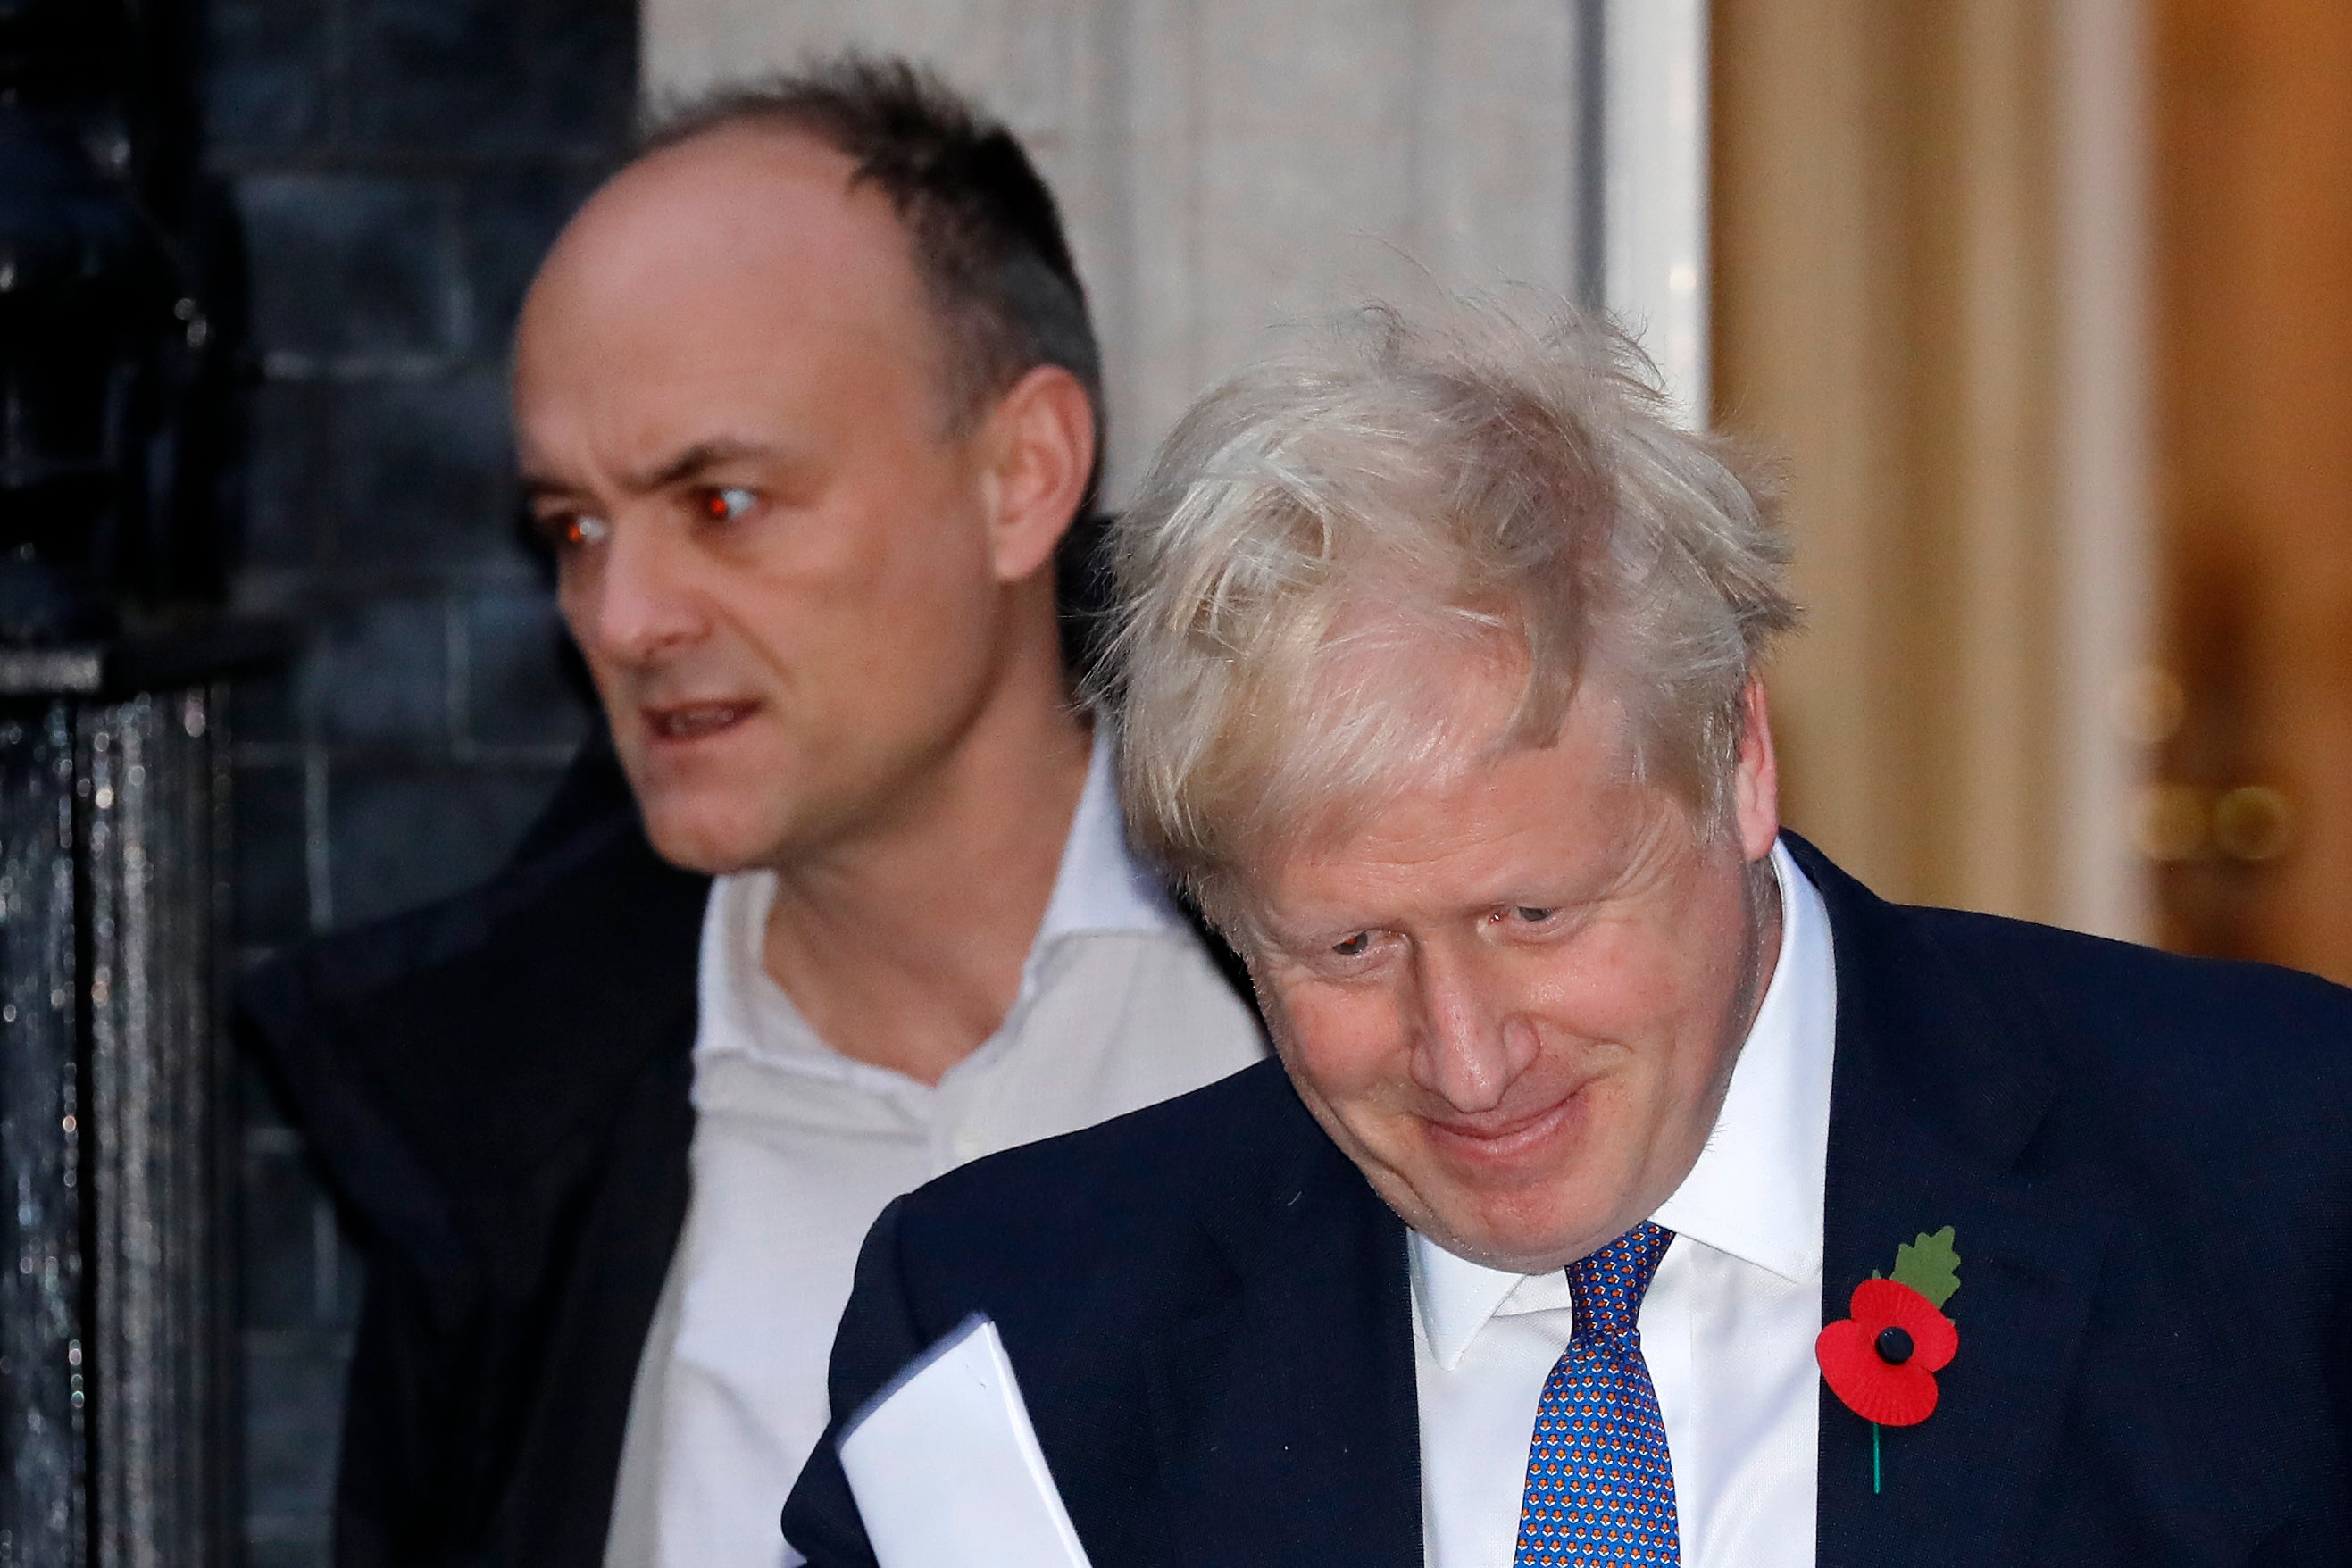 Boris Johnson and Cummings at 10 Downing Street in 2019